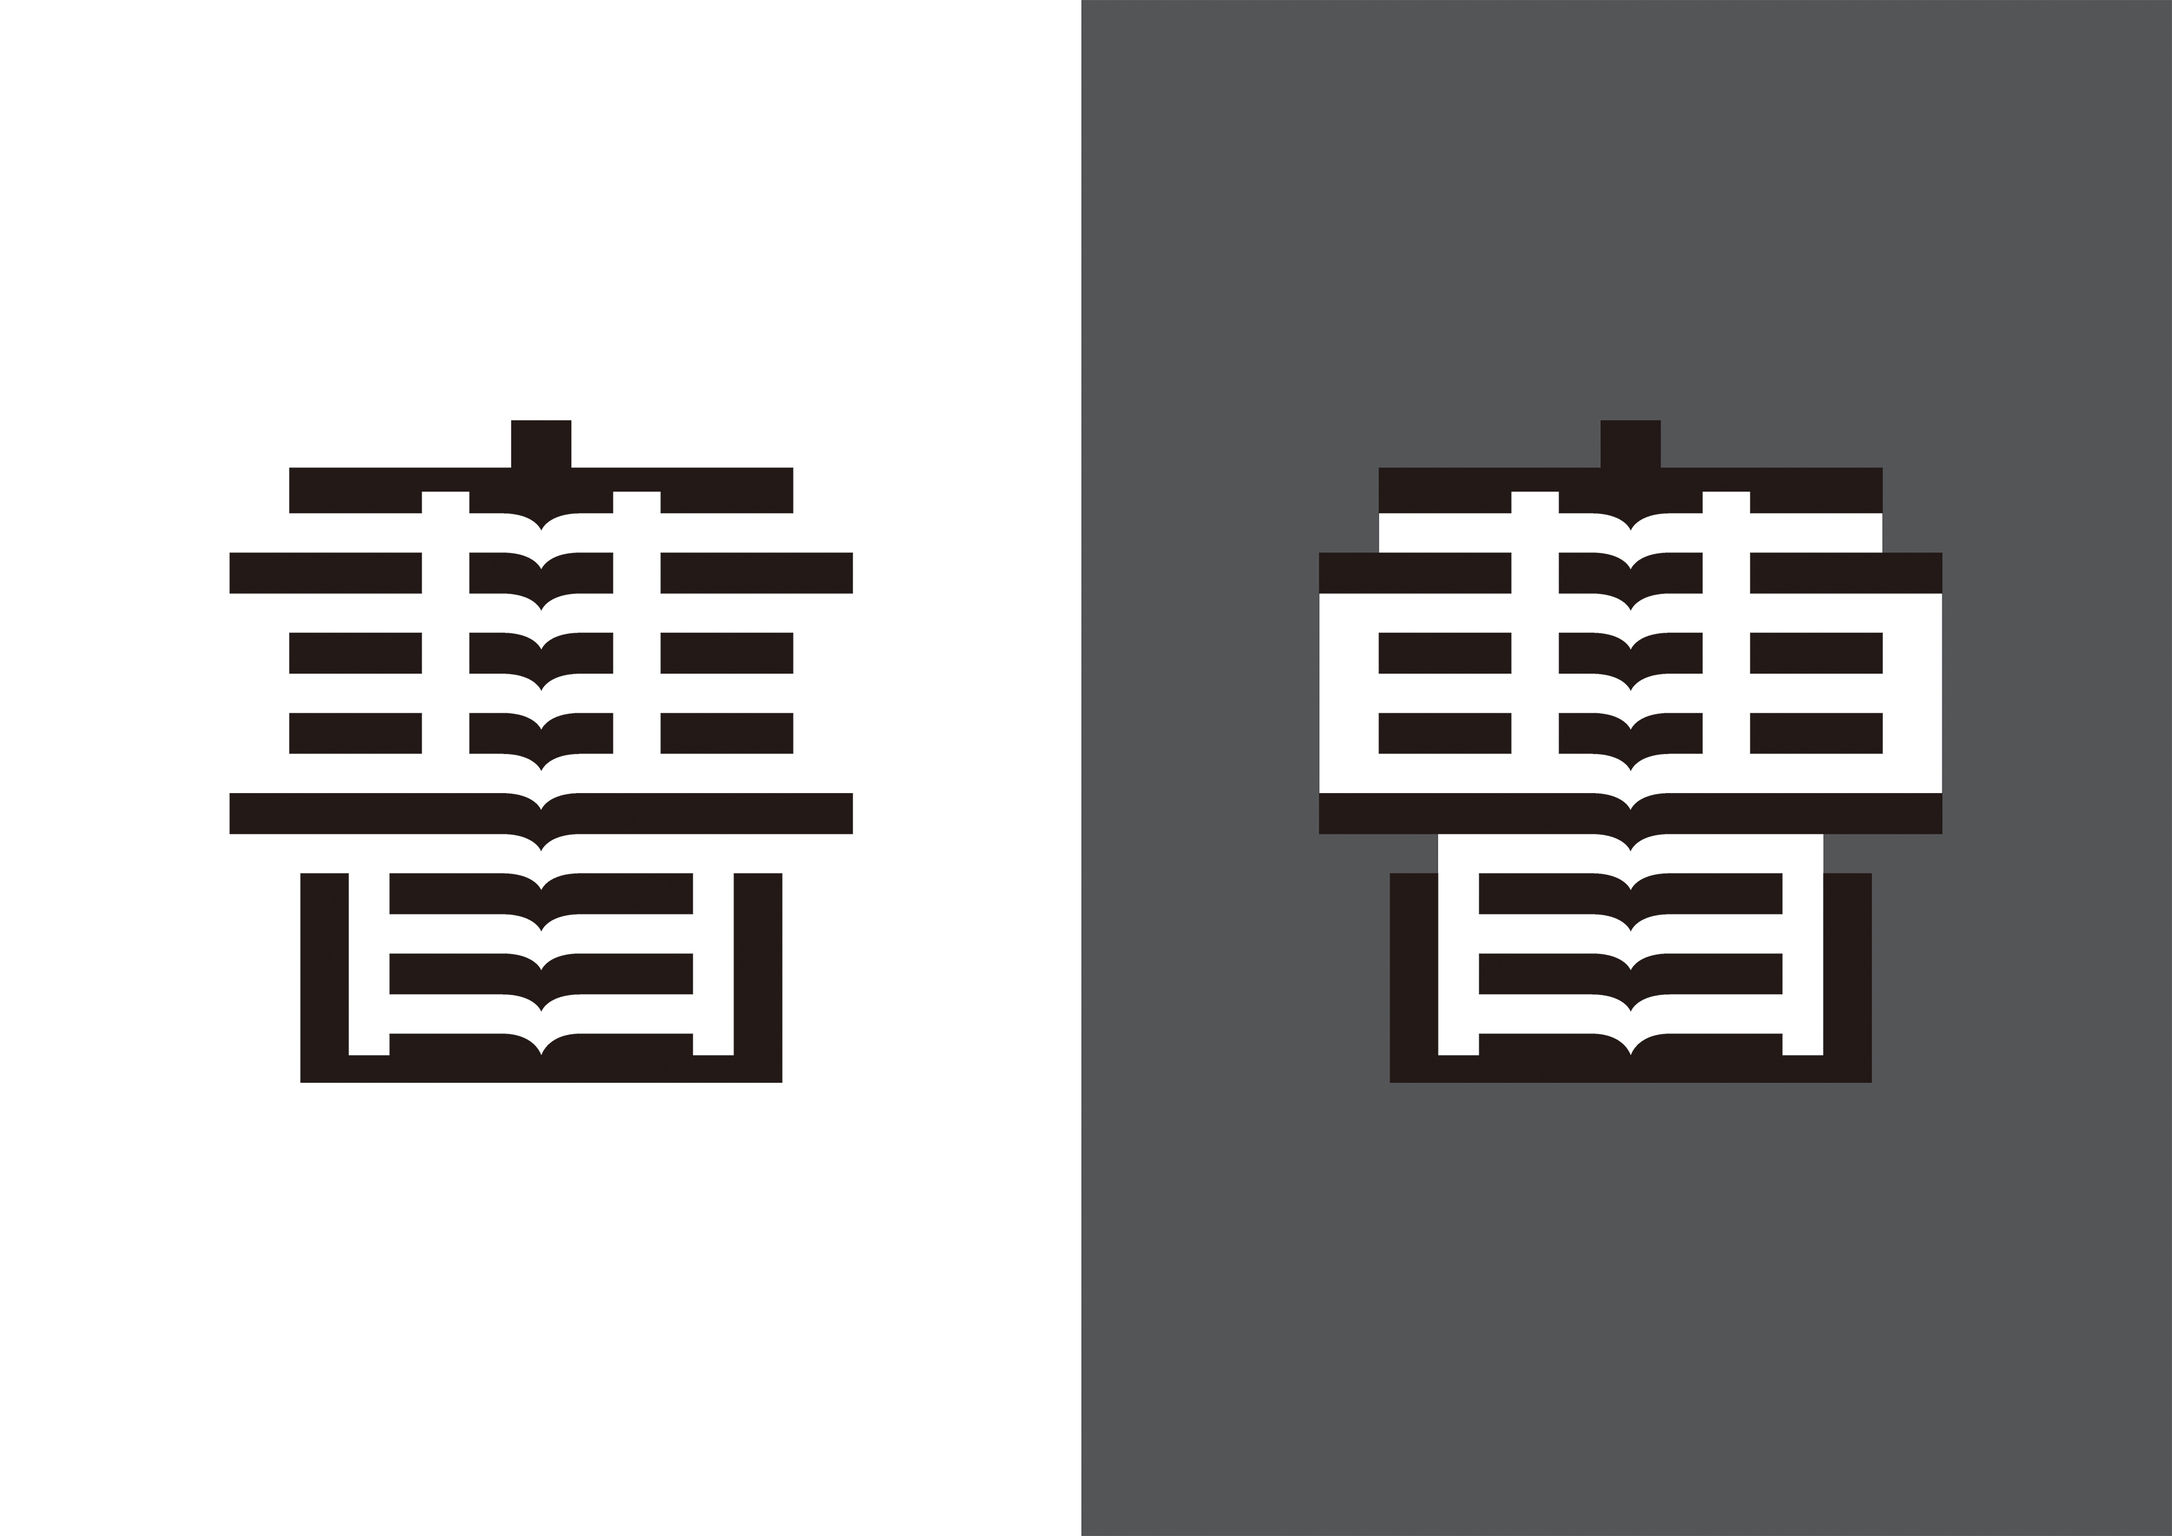 Caobu Public Library Logo